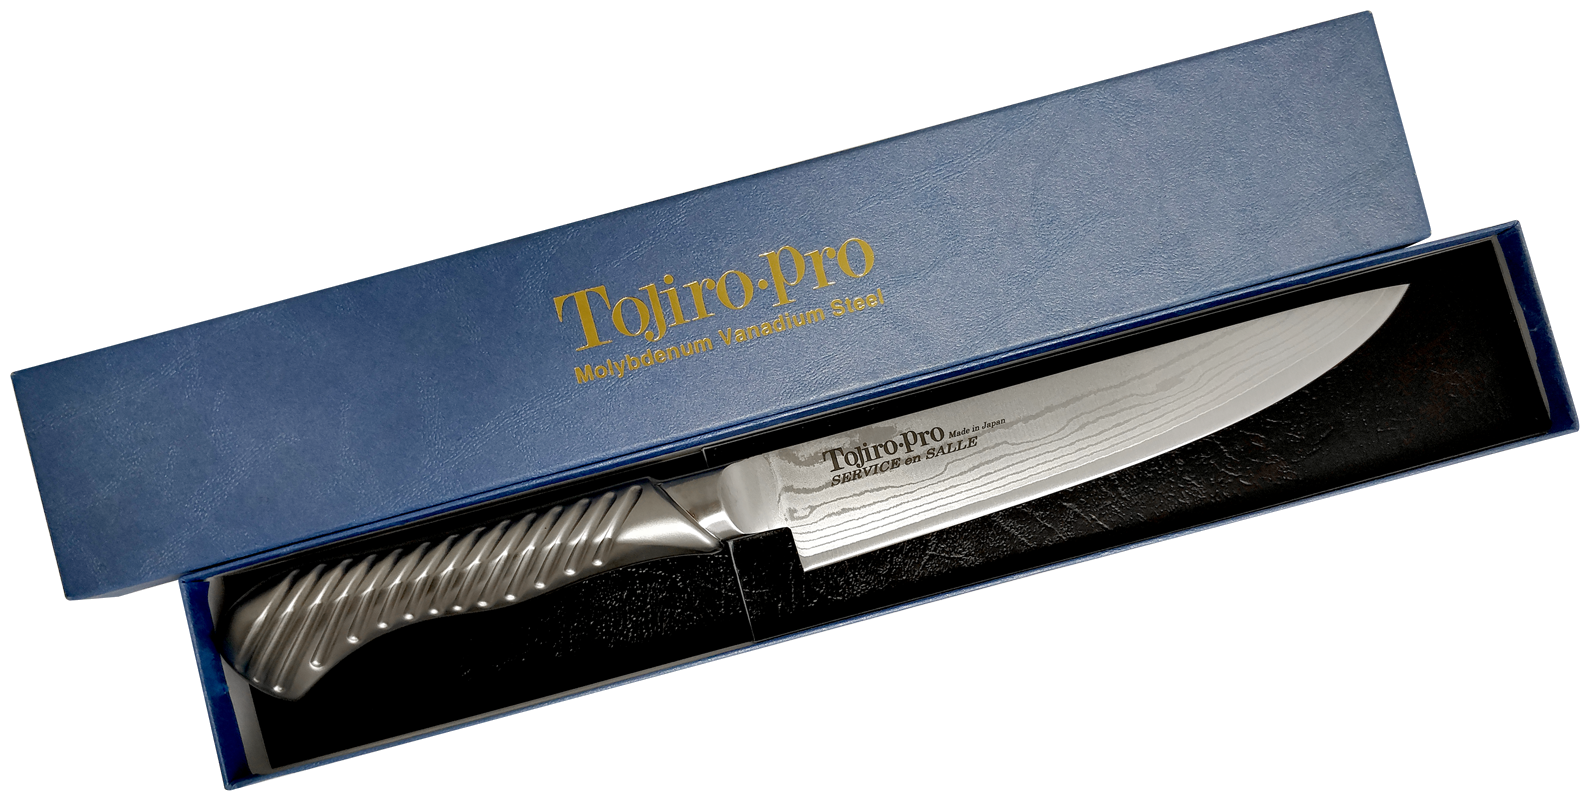 Нож 17 см. Tojiro нож для стейка service Knife 17 см. Tojiro нож для стейка service Knife 19 см. Honestly нож 17см.